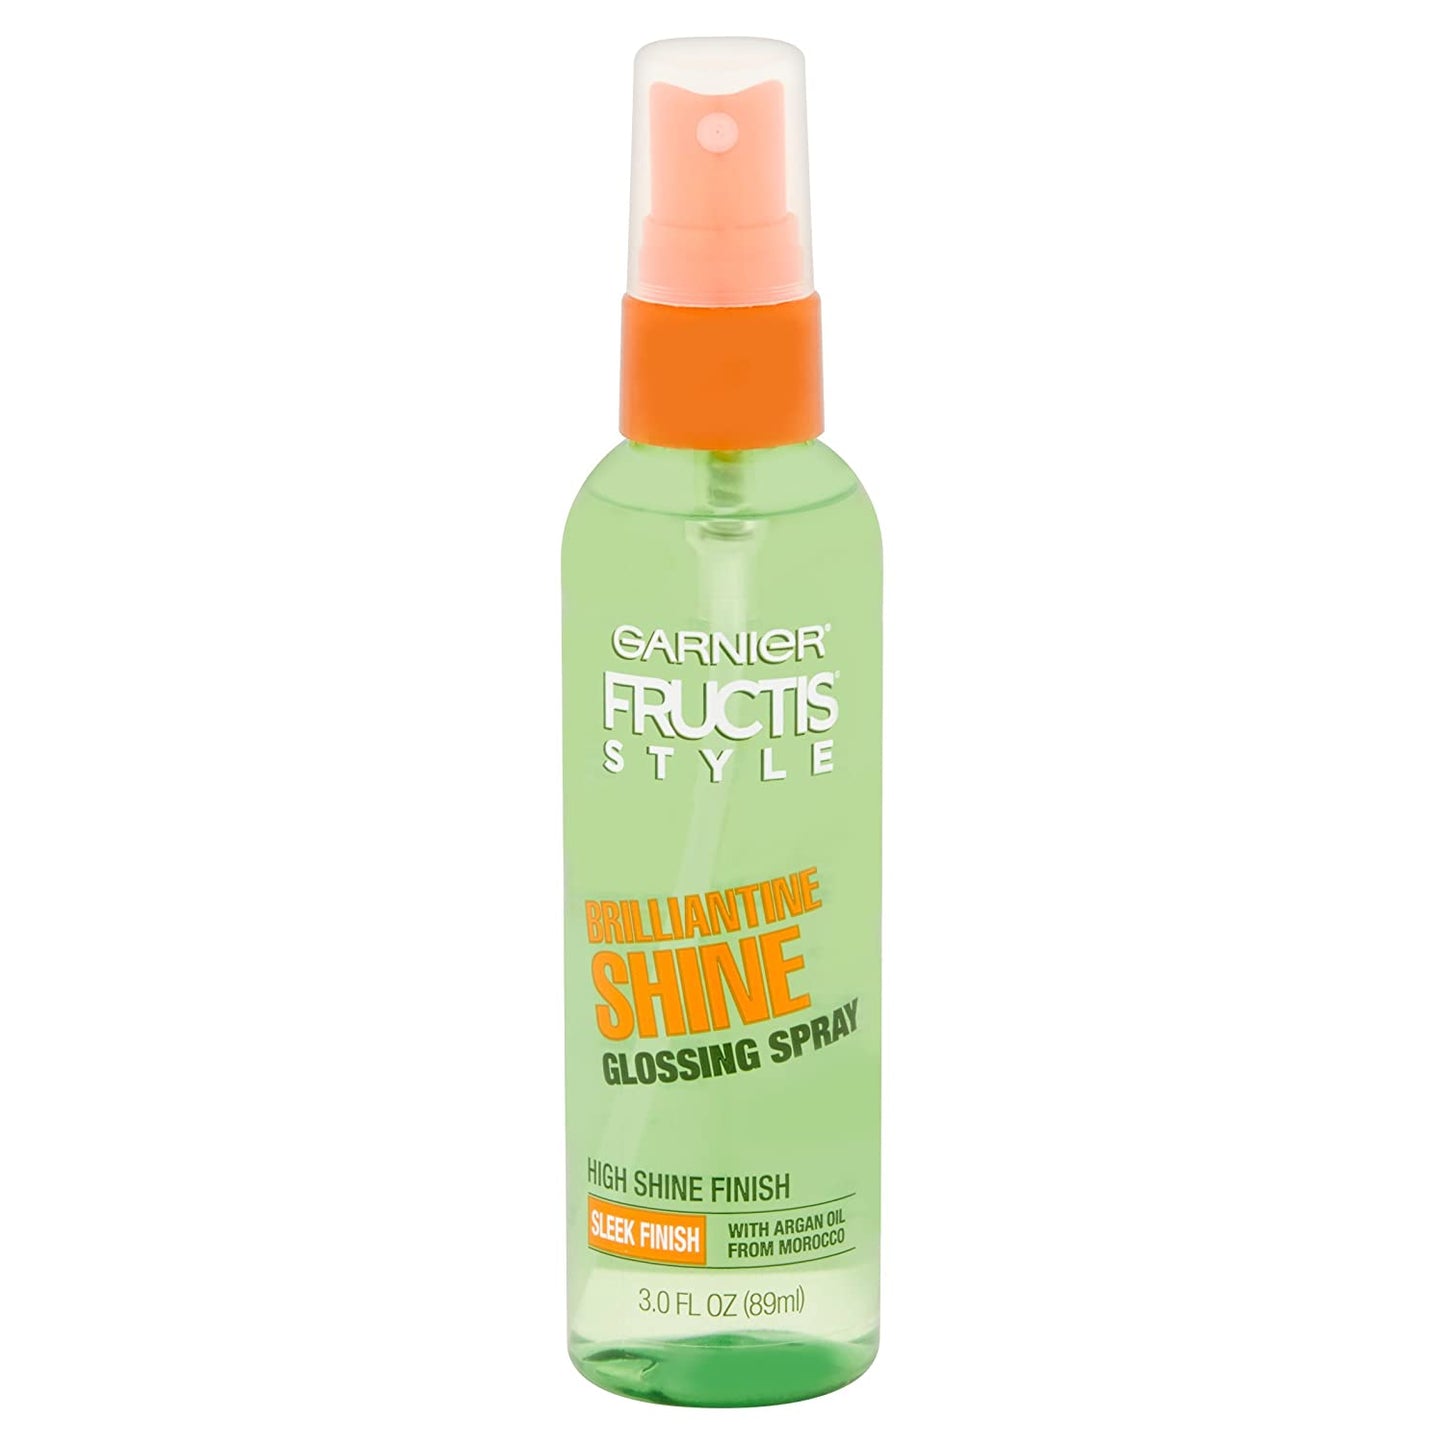 Garnier Hair Care Fructis Style Brilliantine Shine Glossing Spray With Argan Oil, 3.0 fl.oz / 89ml